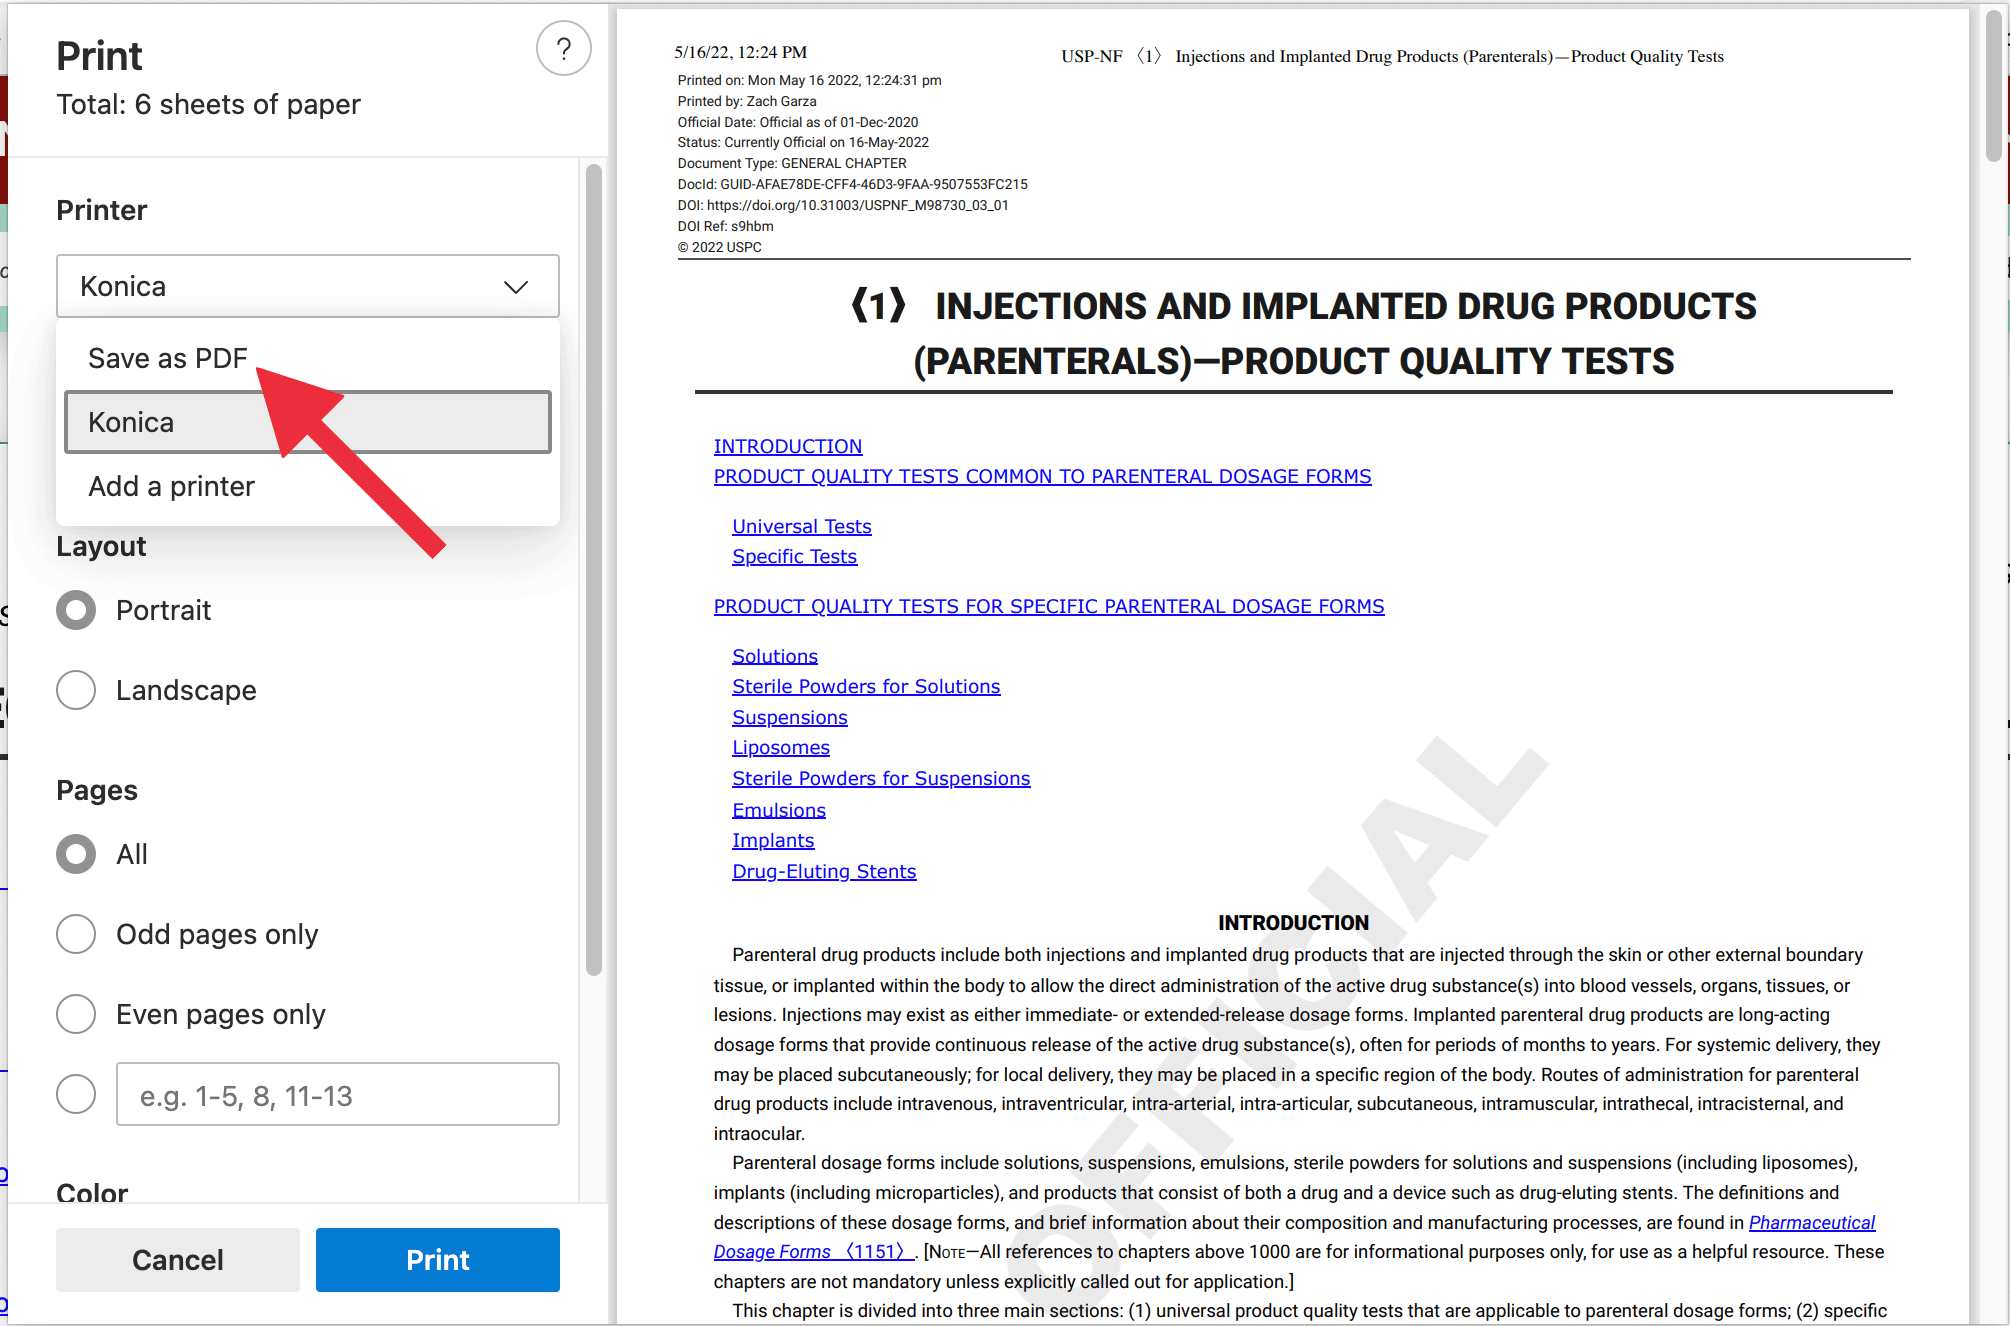 jage Vend om kandidatgrad Open/Print a Document as PDF